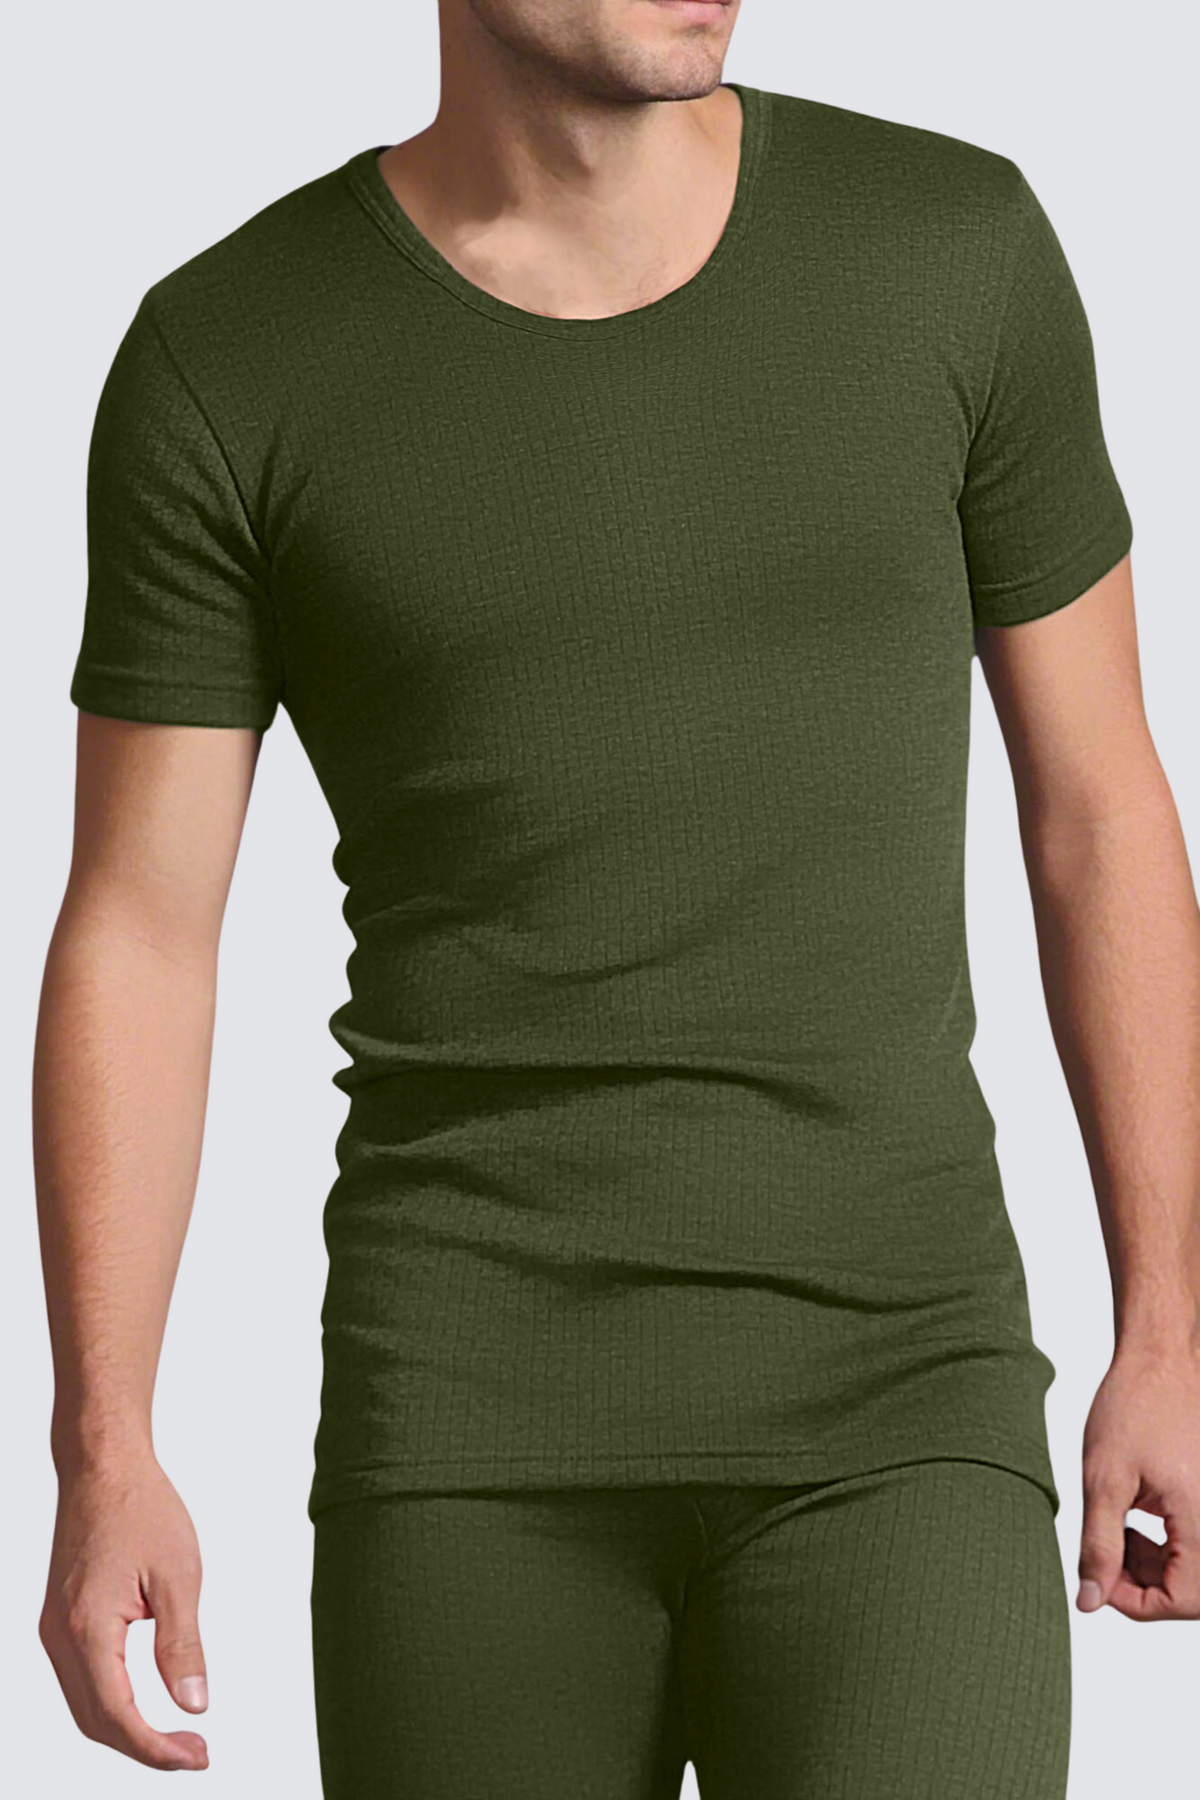 Men's Premium Thermal Top Short Sleeve (Olive)